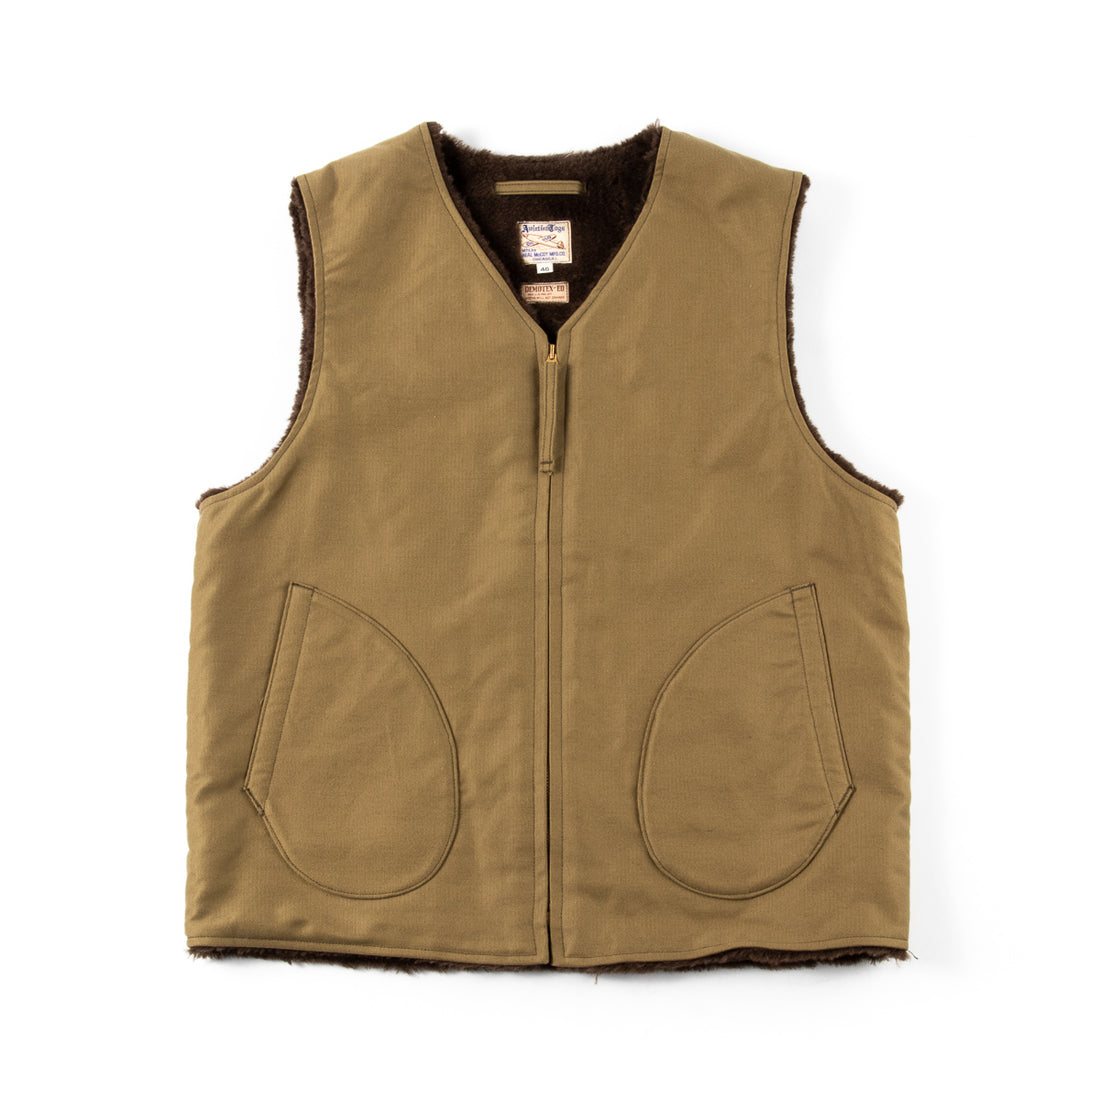 The Real McCoy's Vest, Alpaca, Pile-Lined - Khaki - Standard & Strange